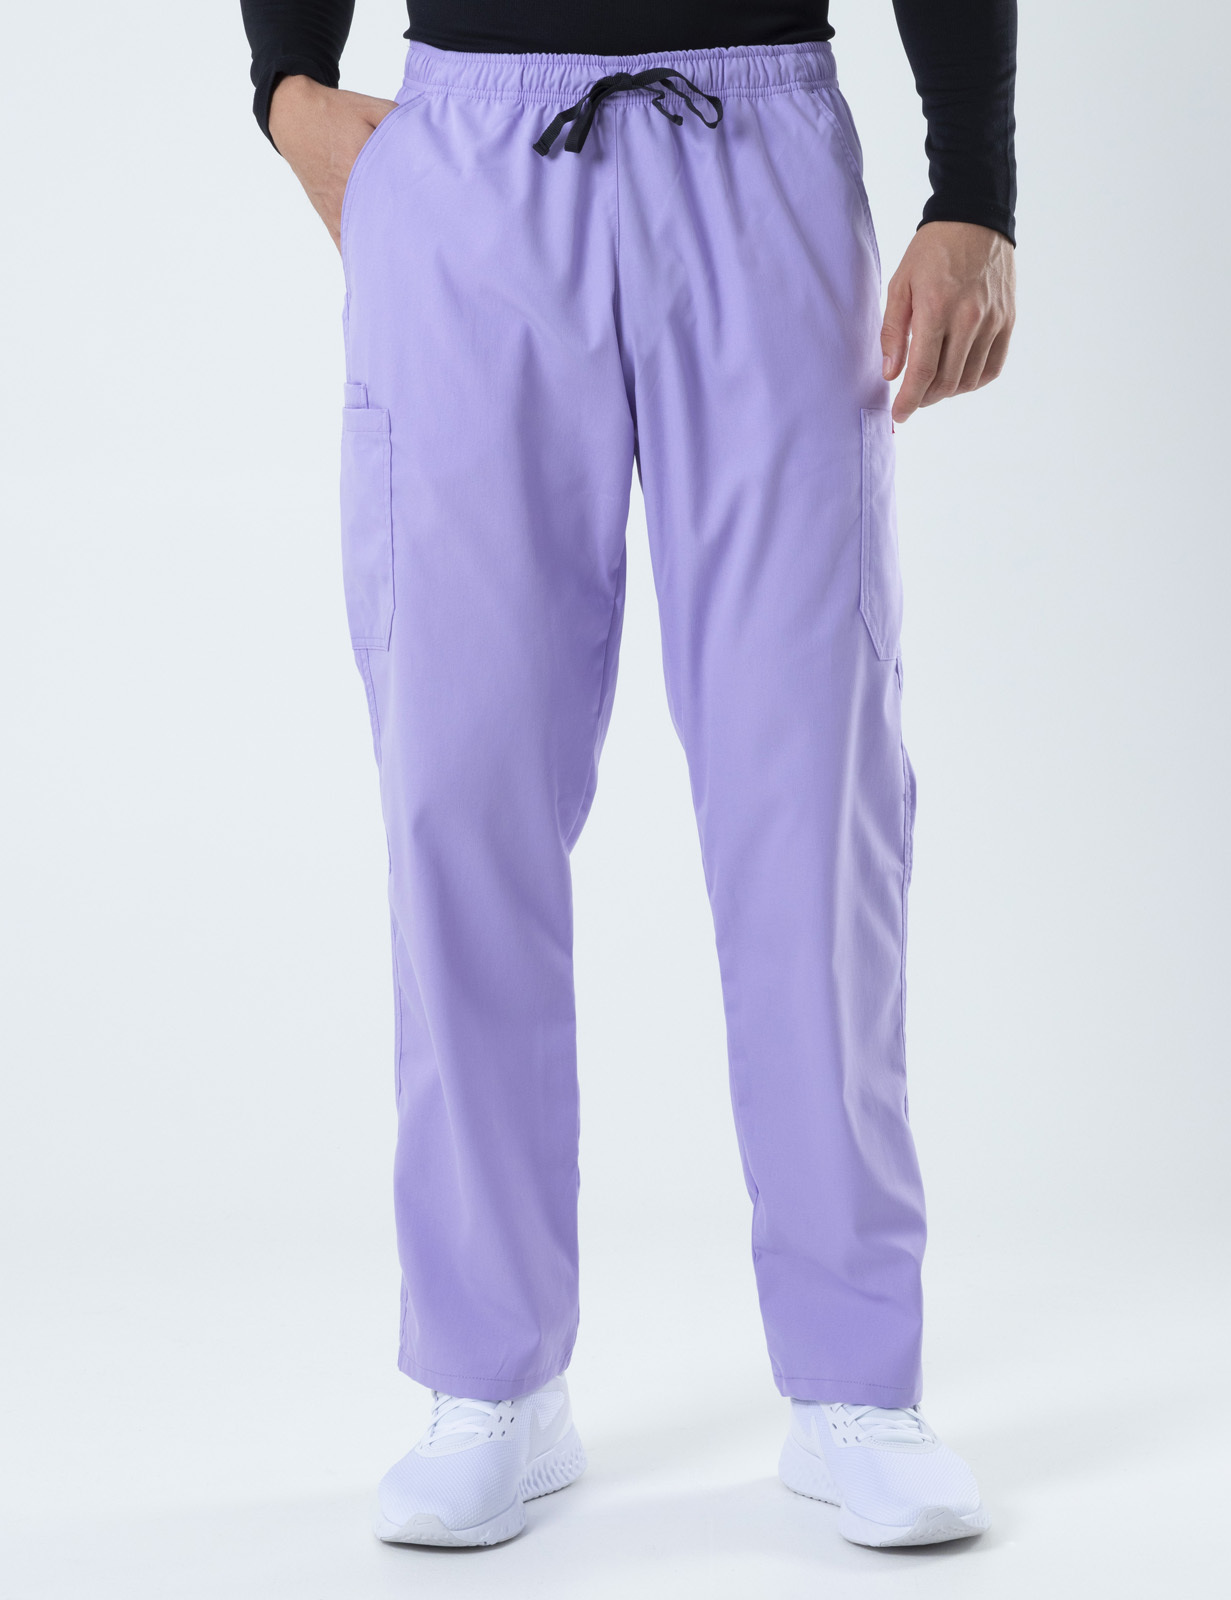 Men's Cargo Performance Pants - Lilac - 4X large